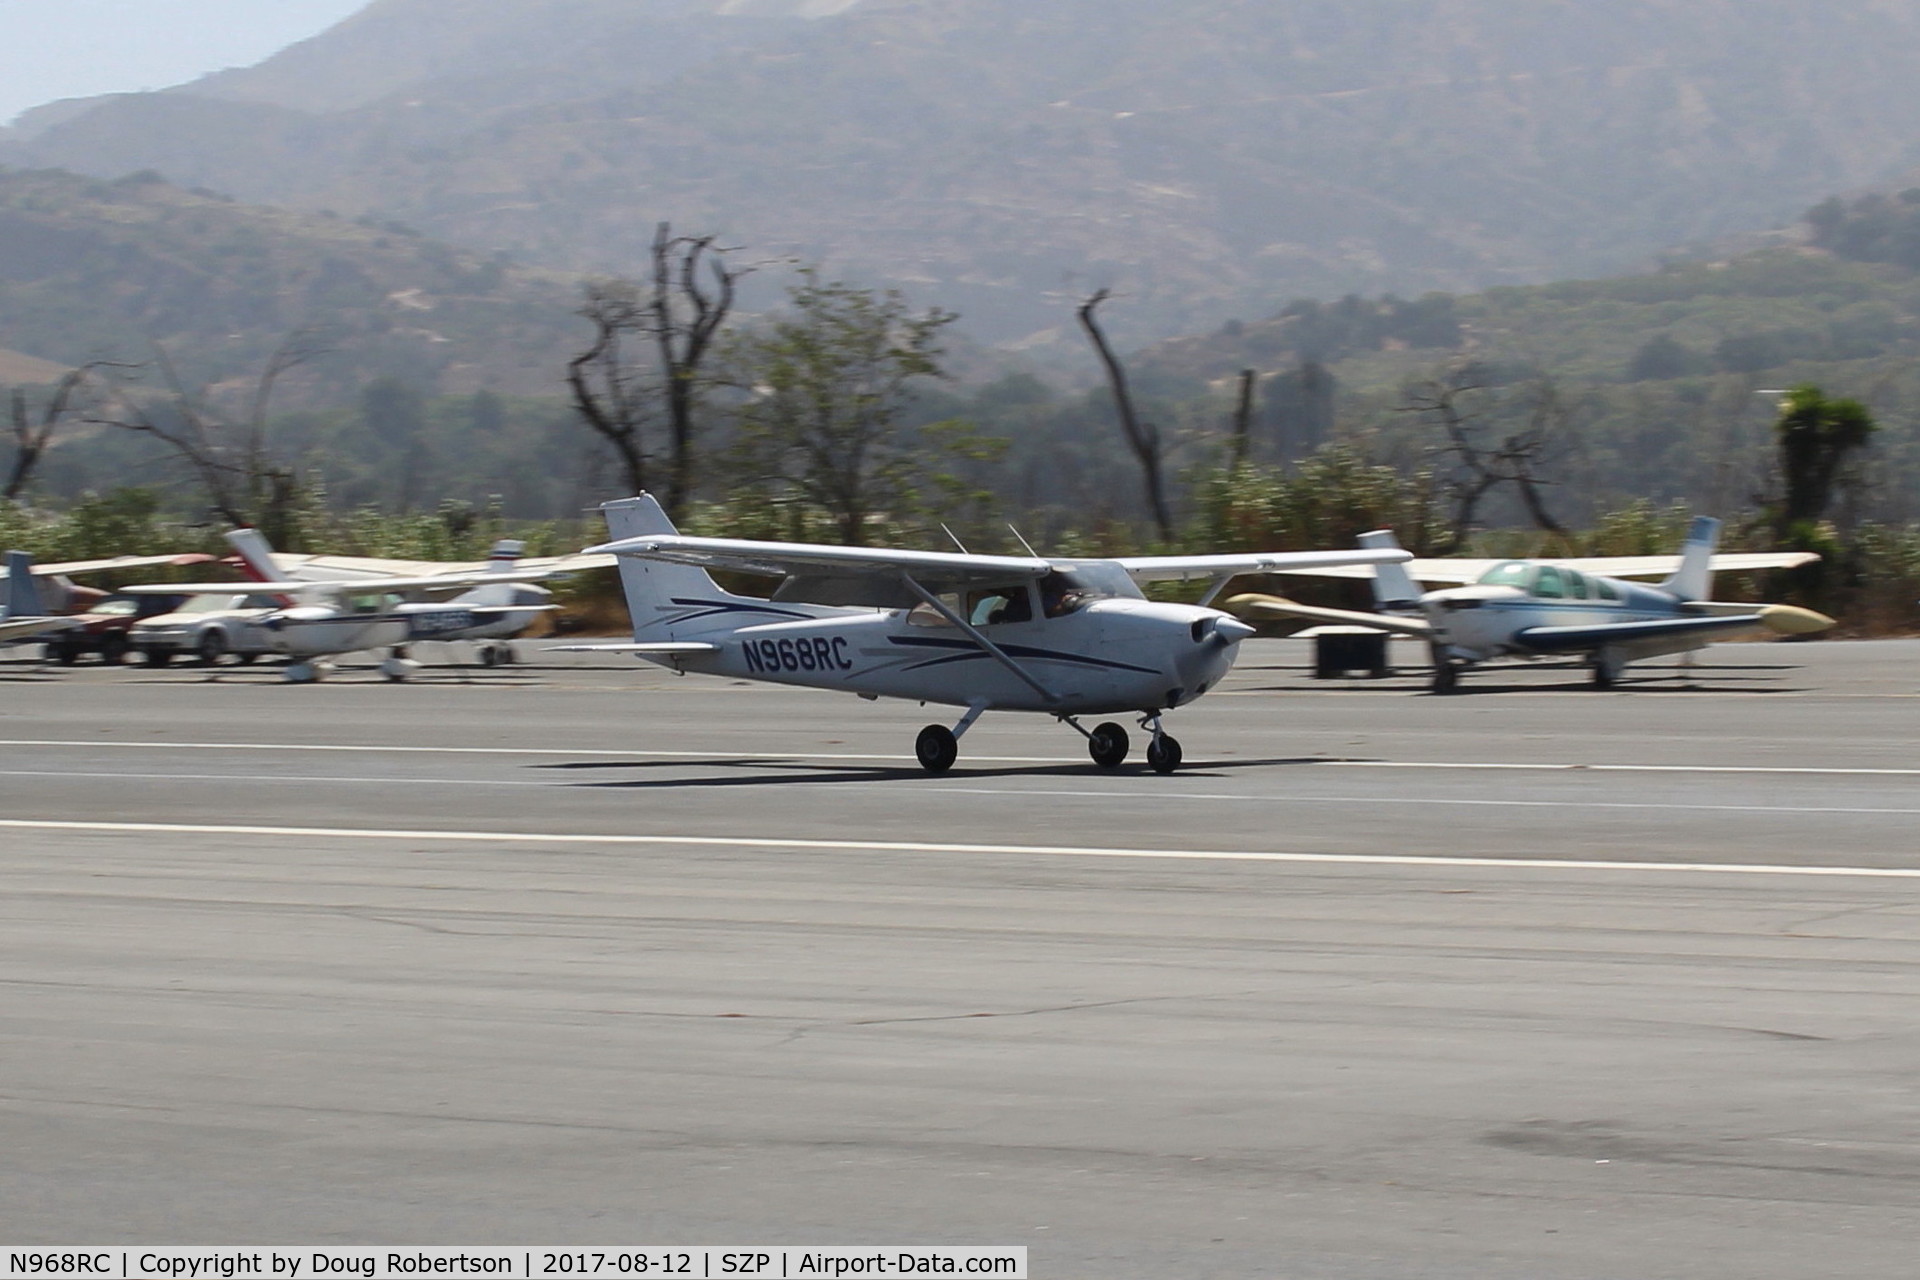 N968RC, 1984 Cessna 172P C/N 17276126, 1984 Cessna 172P SKYHAWK, Lycoming IO-360-D2J 160 Hp, landing roll Rwy 22